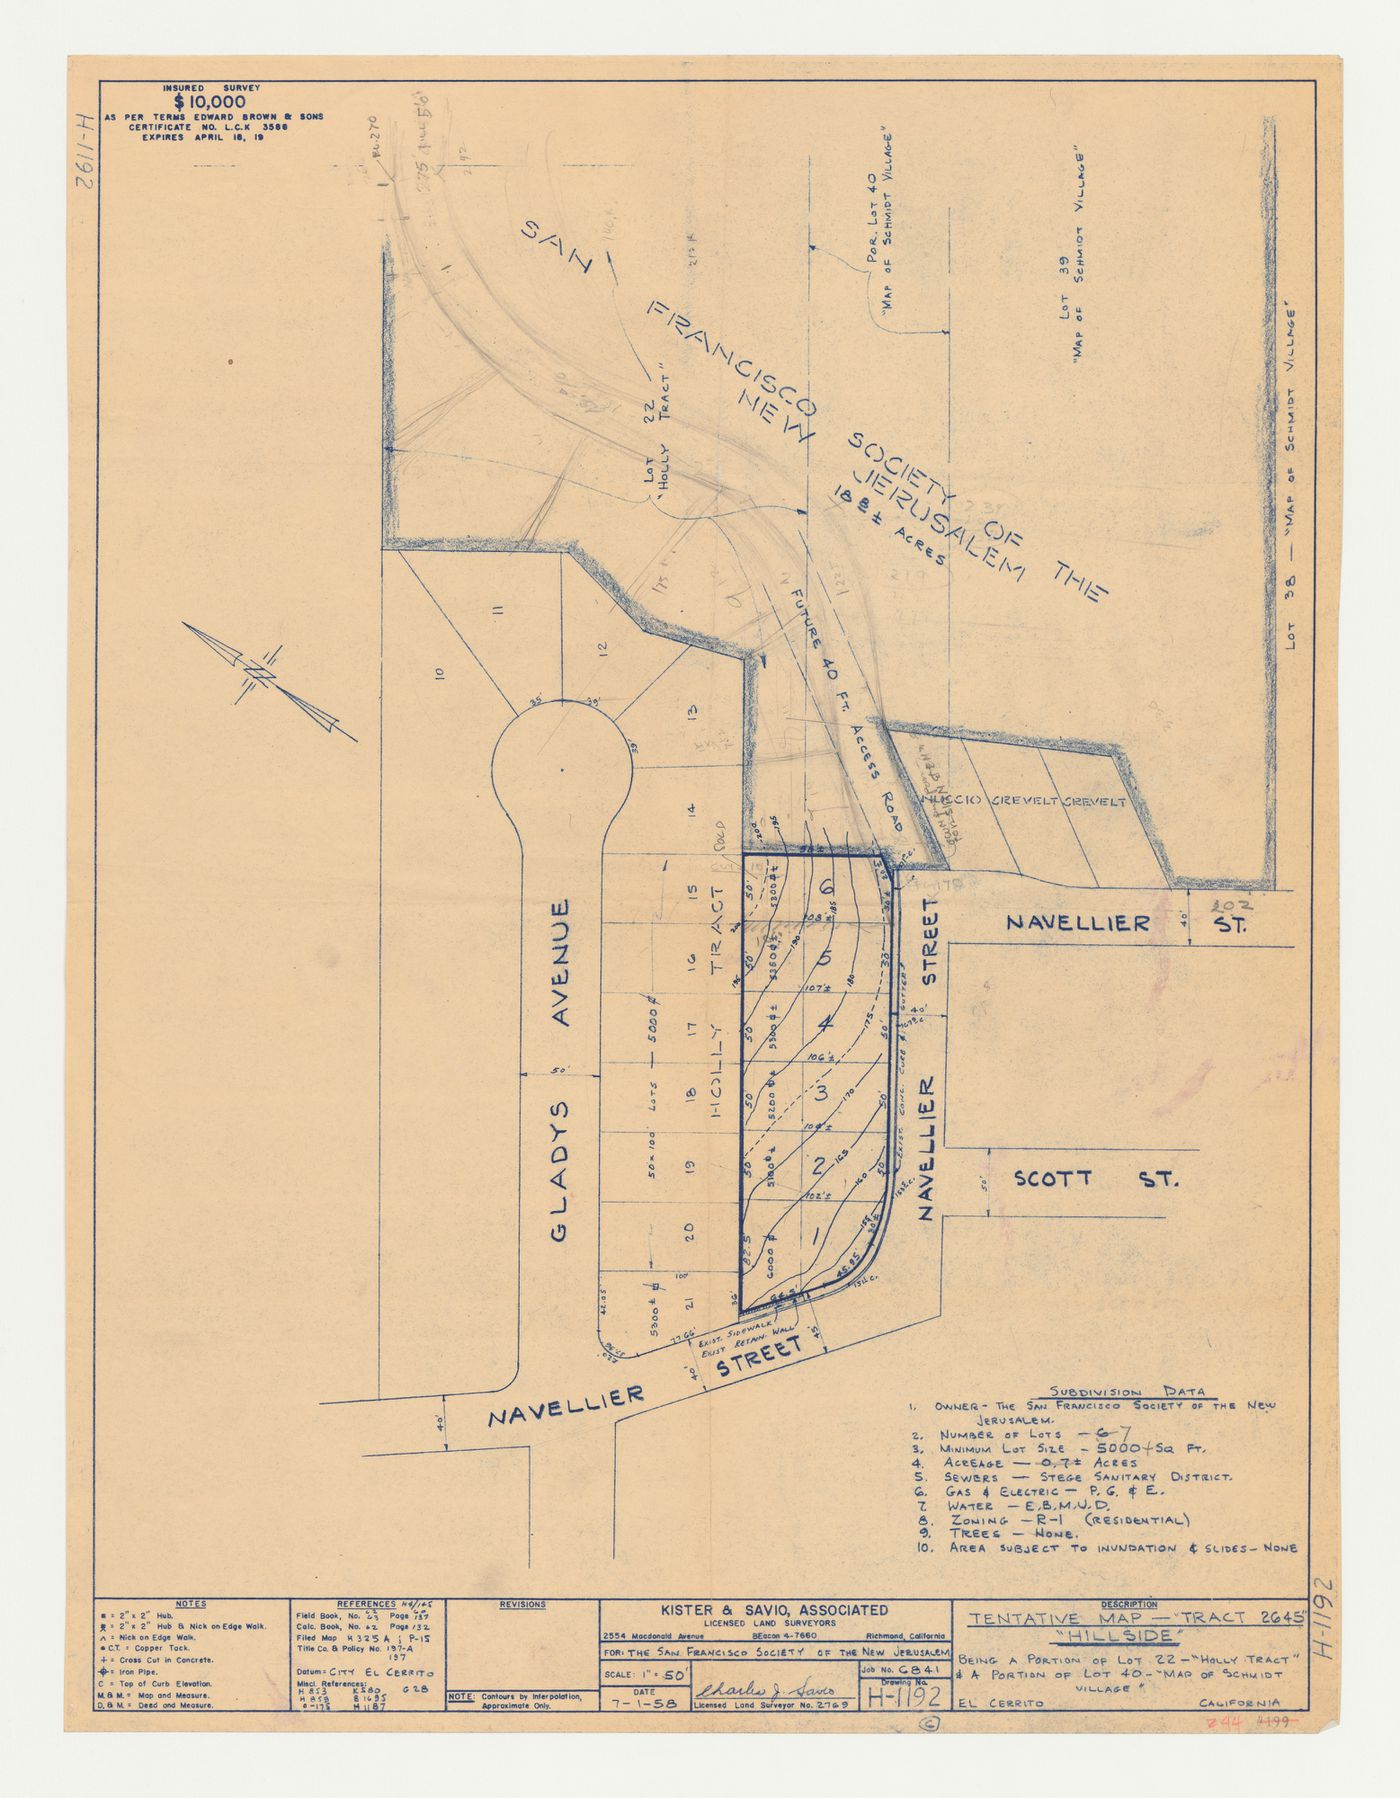 Swedenborg Memorial Chapel, El Cerrito, California: Sketches for lot subdivision on a survey map of the site